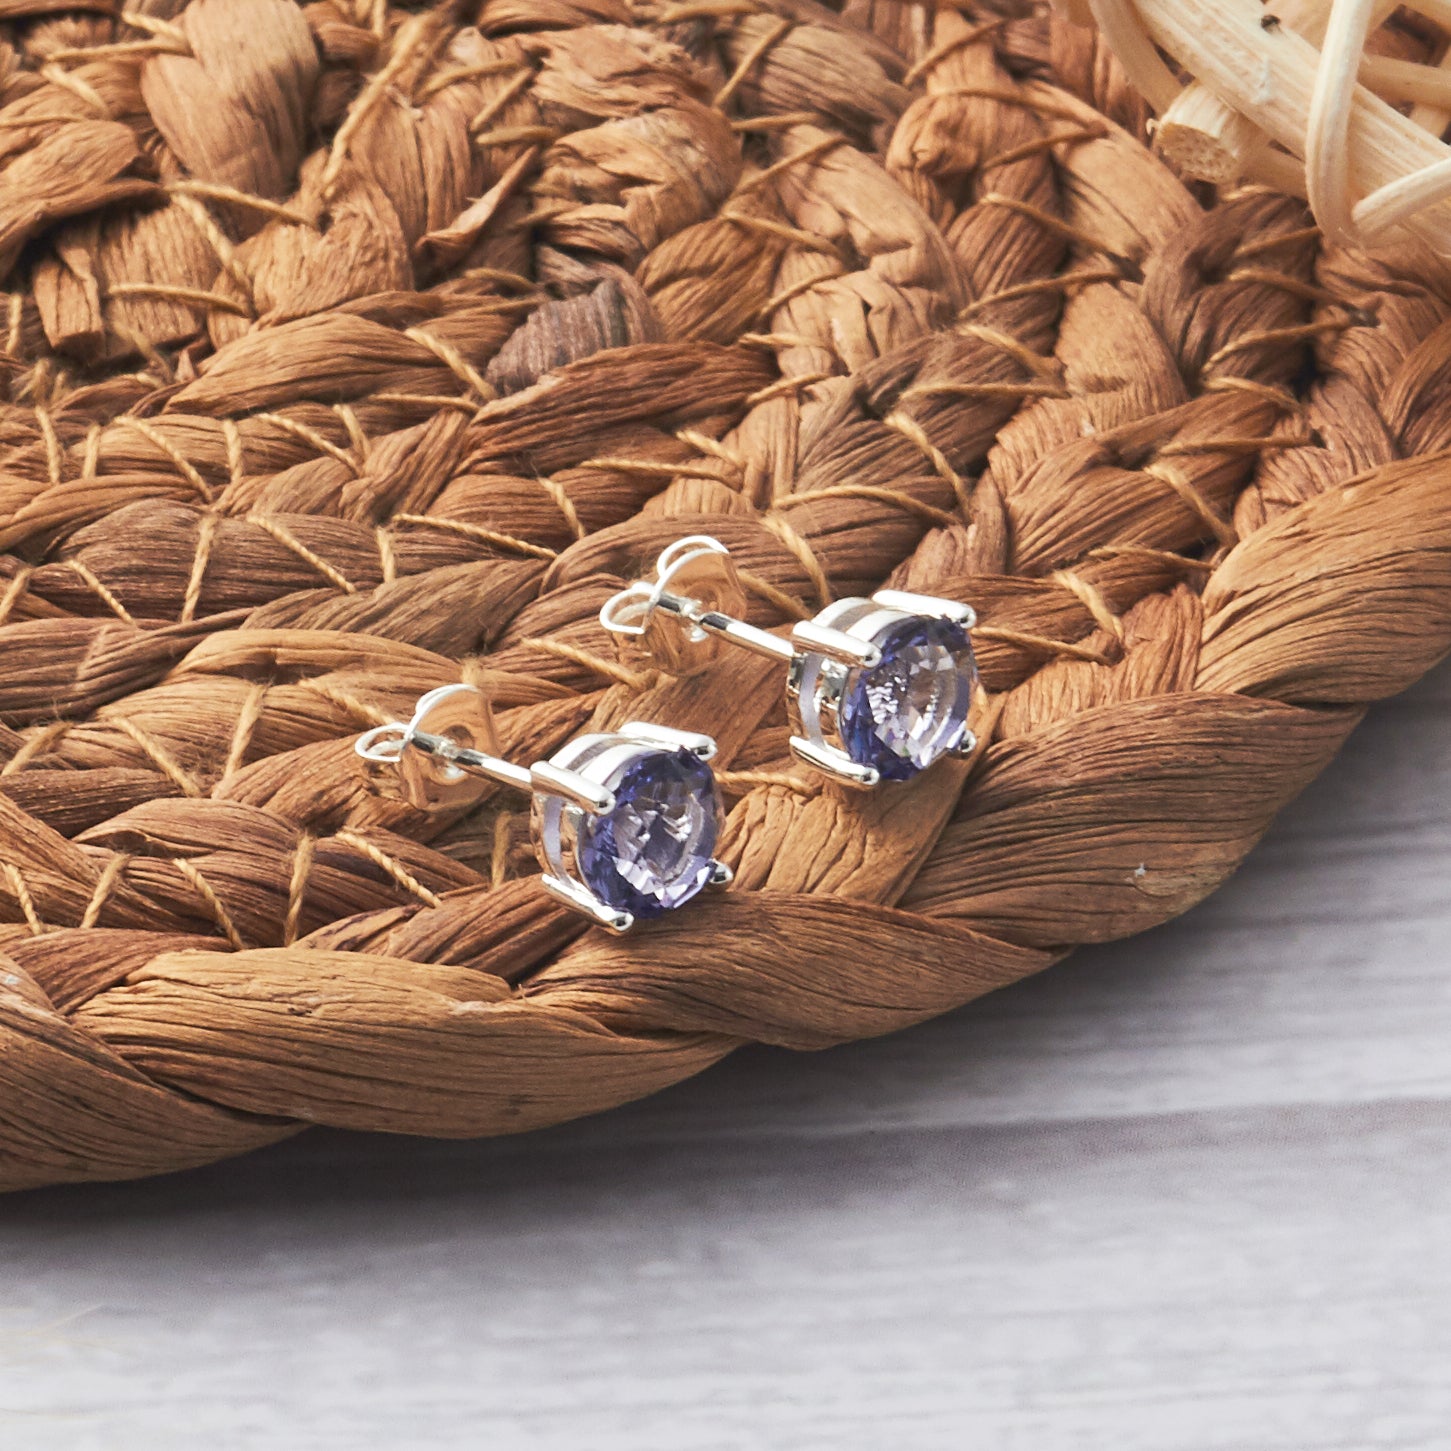 Light Purple Stud Earrings Created with Zircondia® Crystals